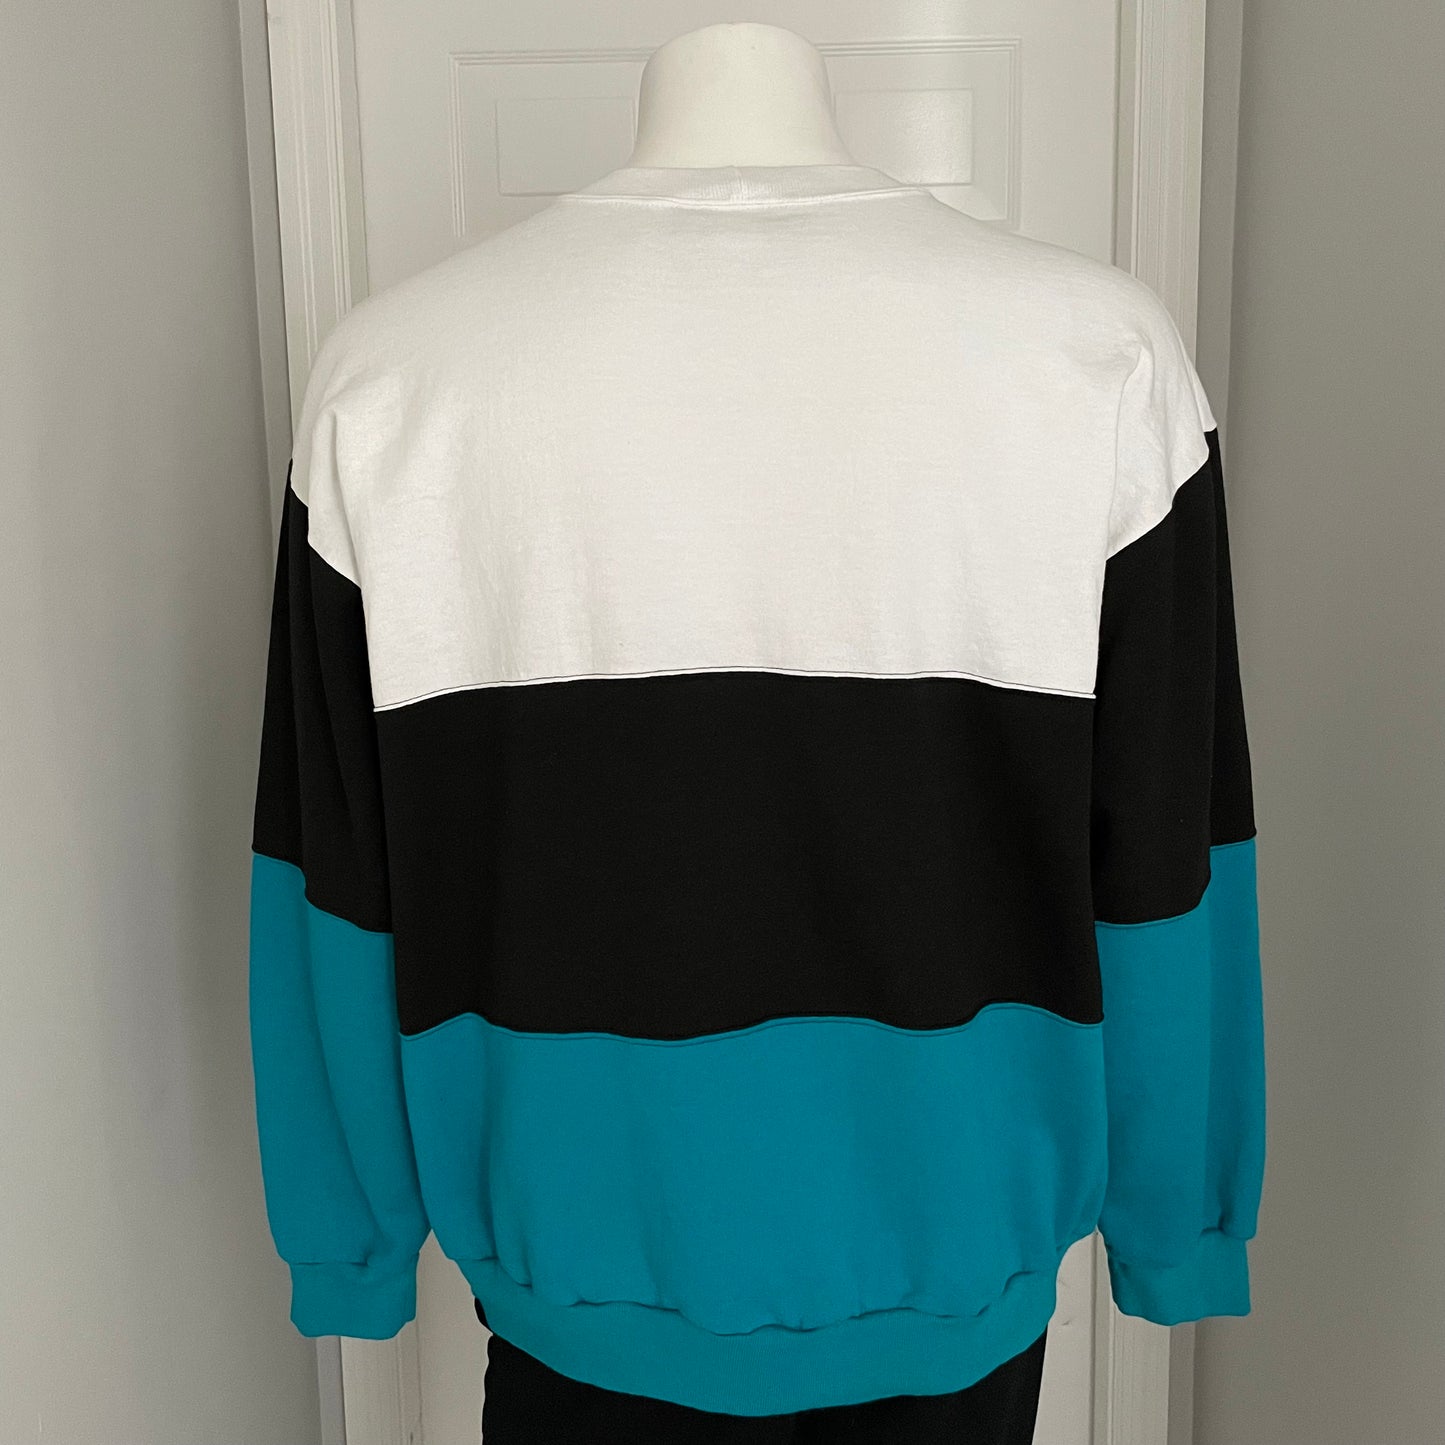 Vintage Jacksonville Jaguars 1994 banned logo color block sweatshirt size XL